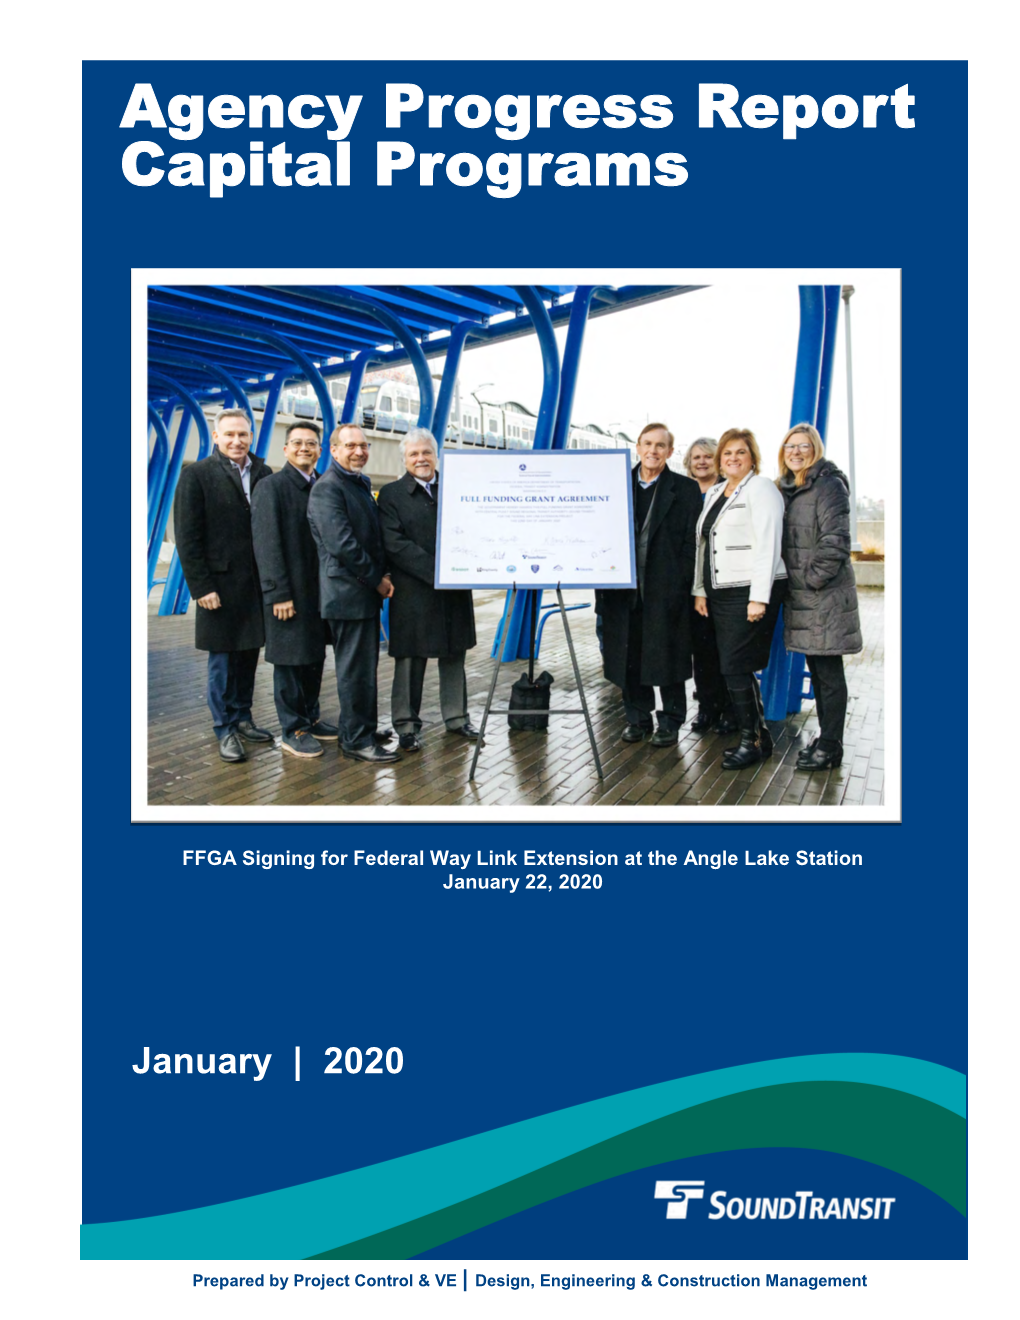 Agency Progress Report Capital Programs